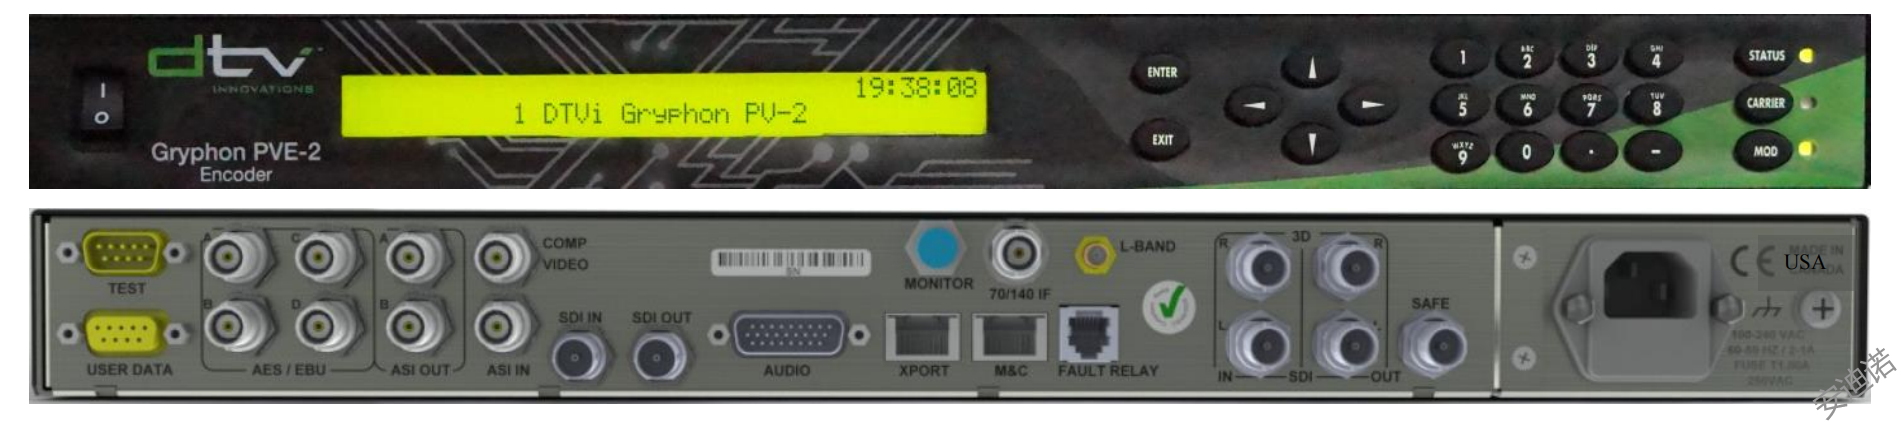 Gryphon PVE-2 MPEG Video Encoder